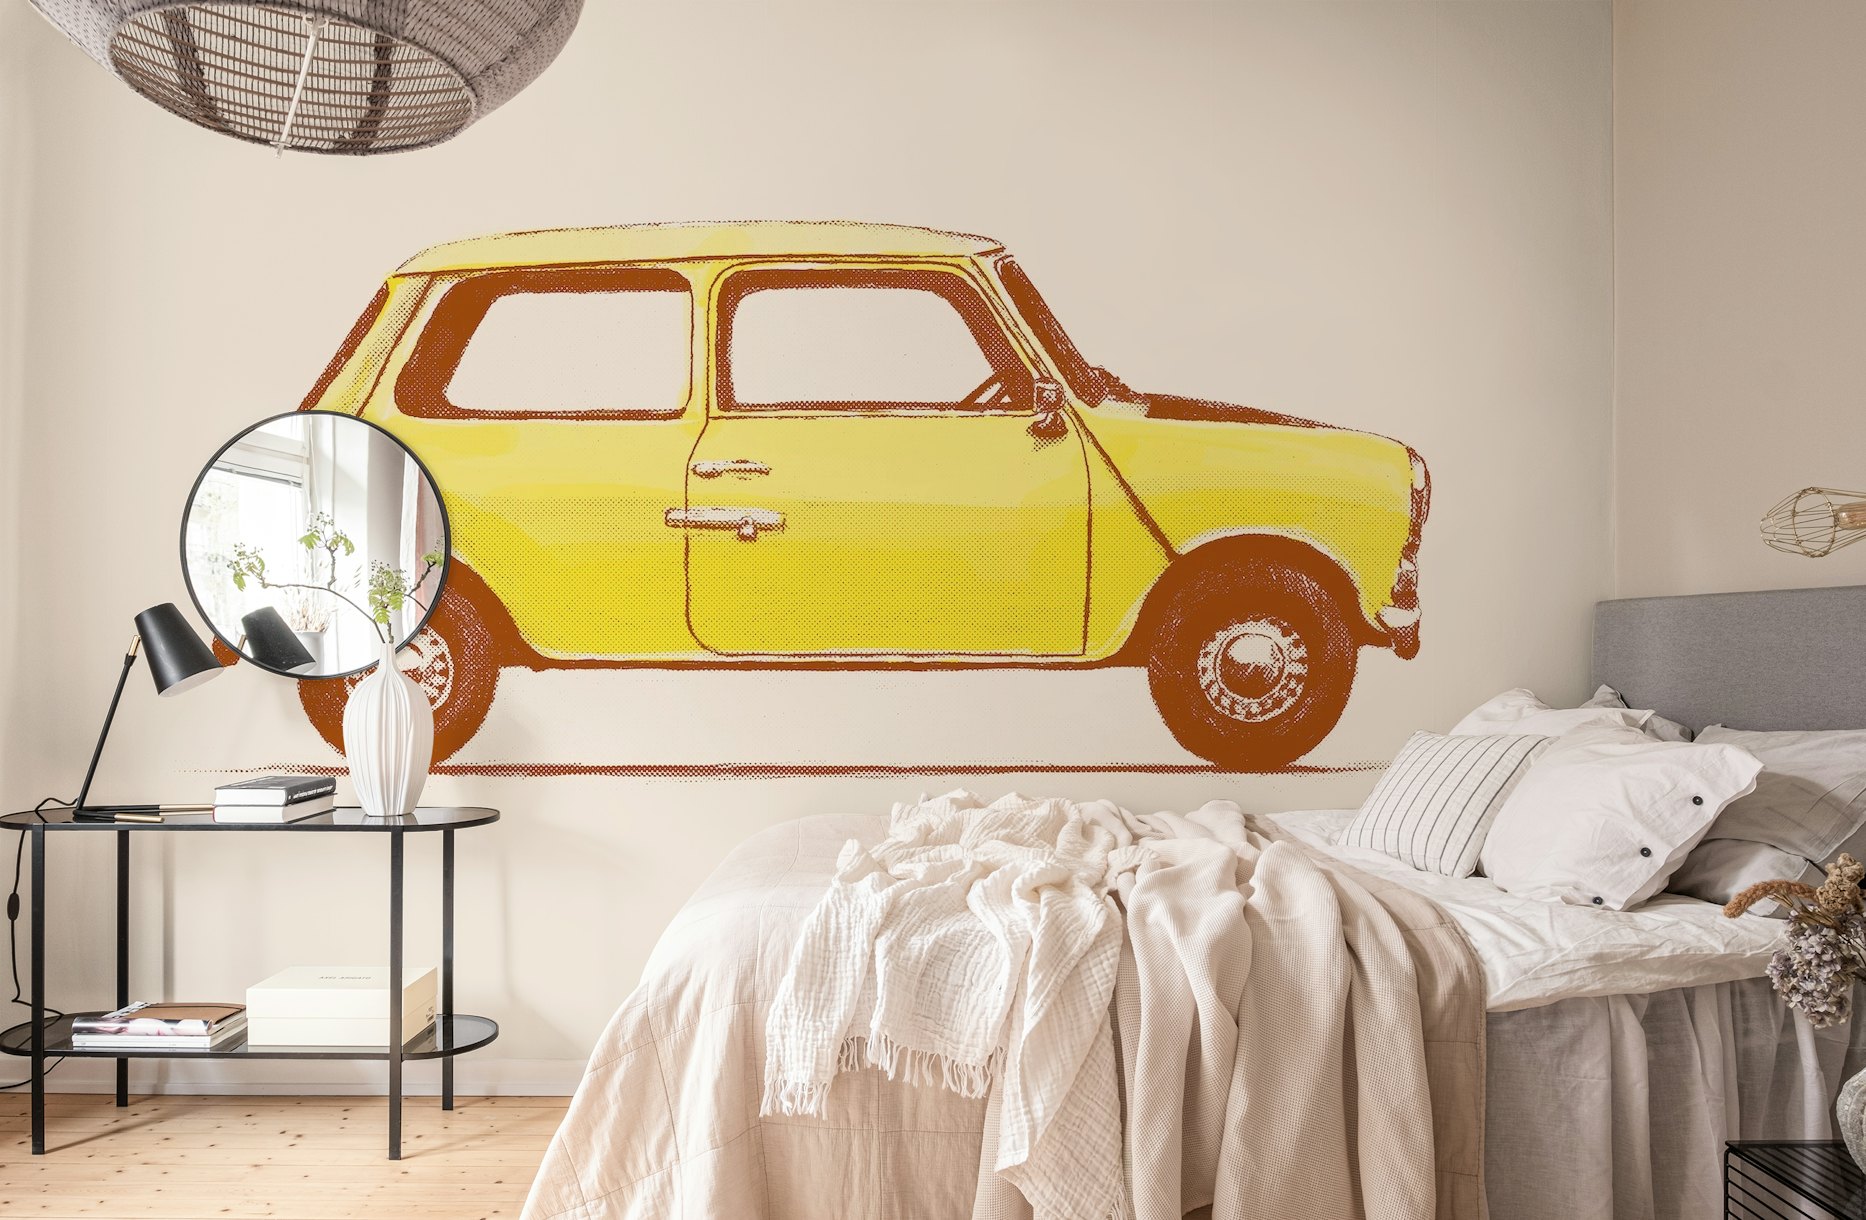 Mini Car wallpaper